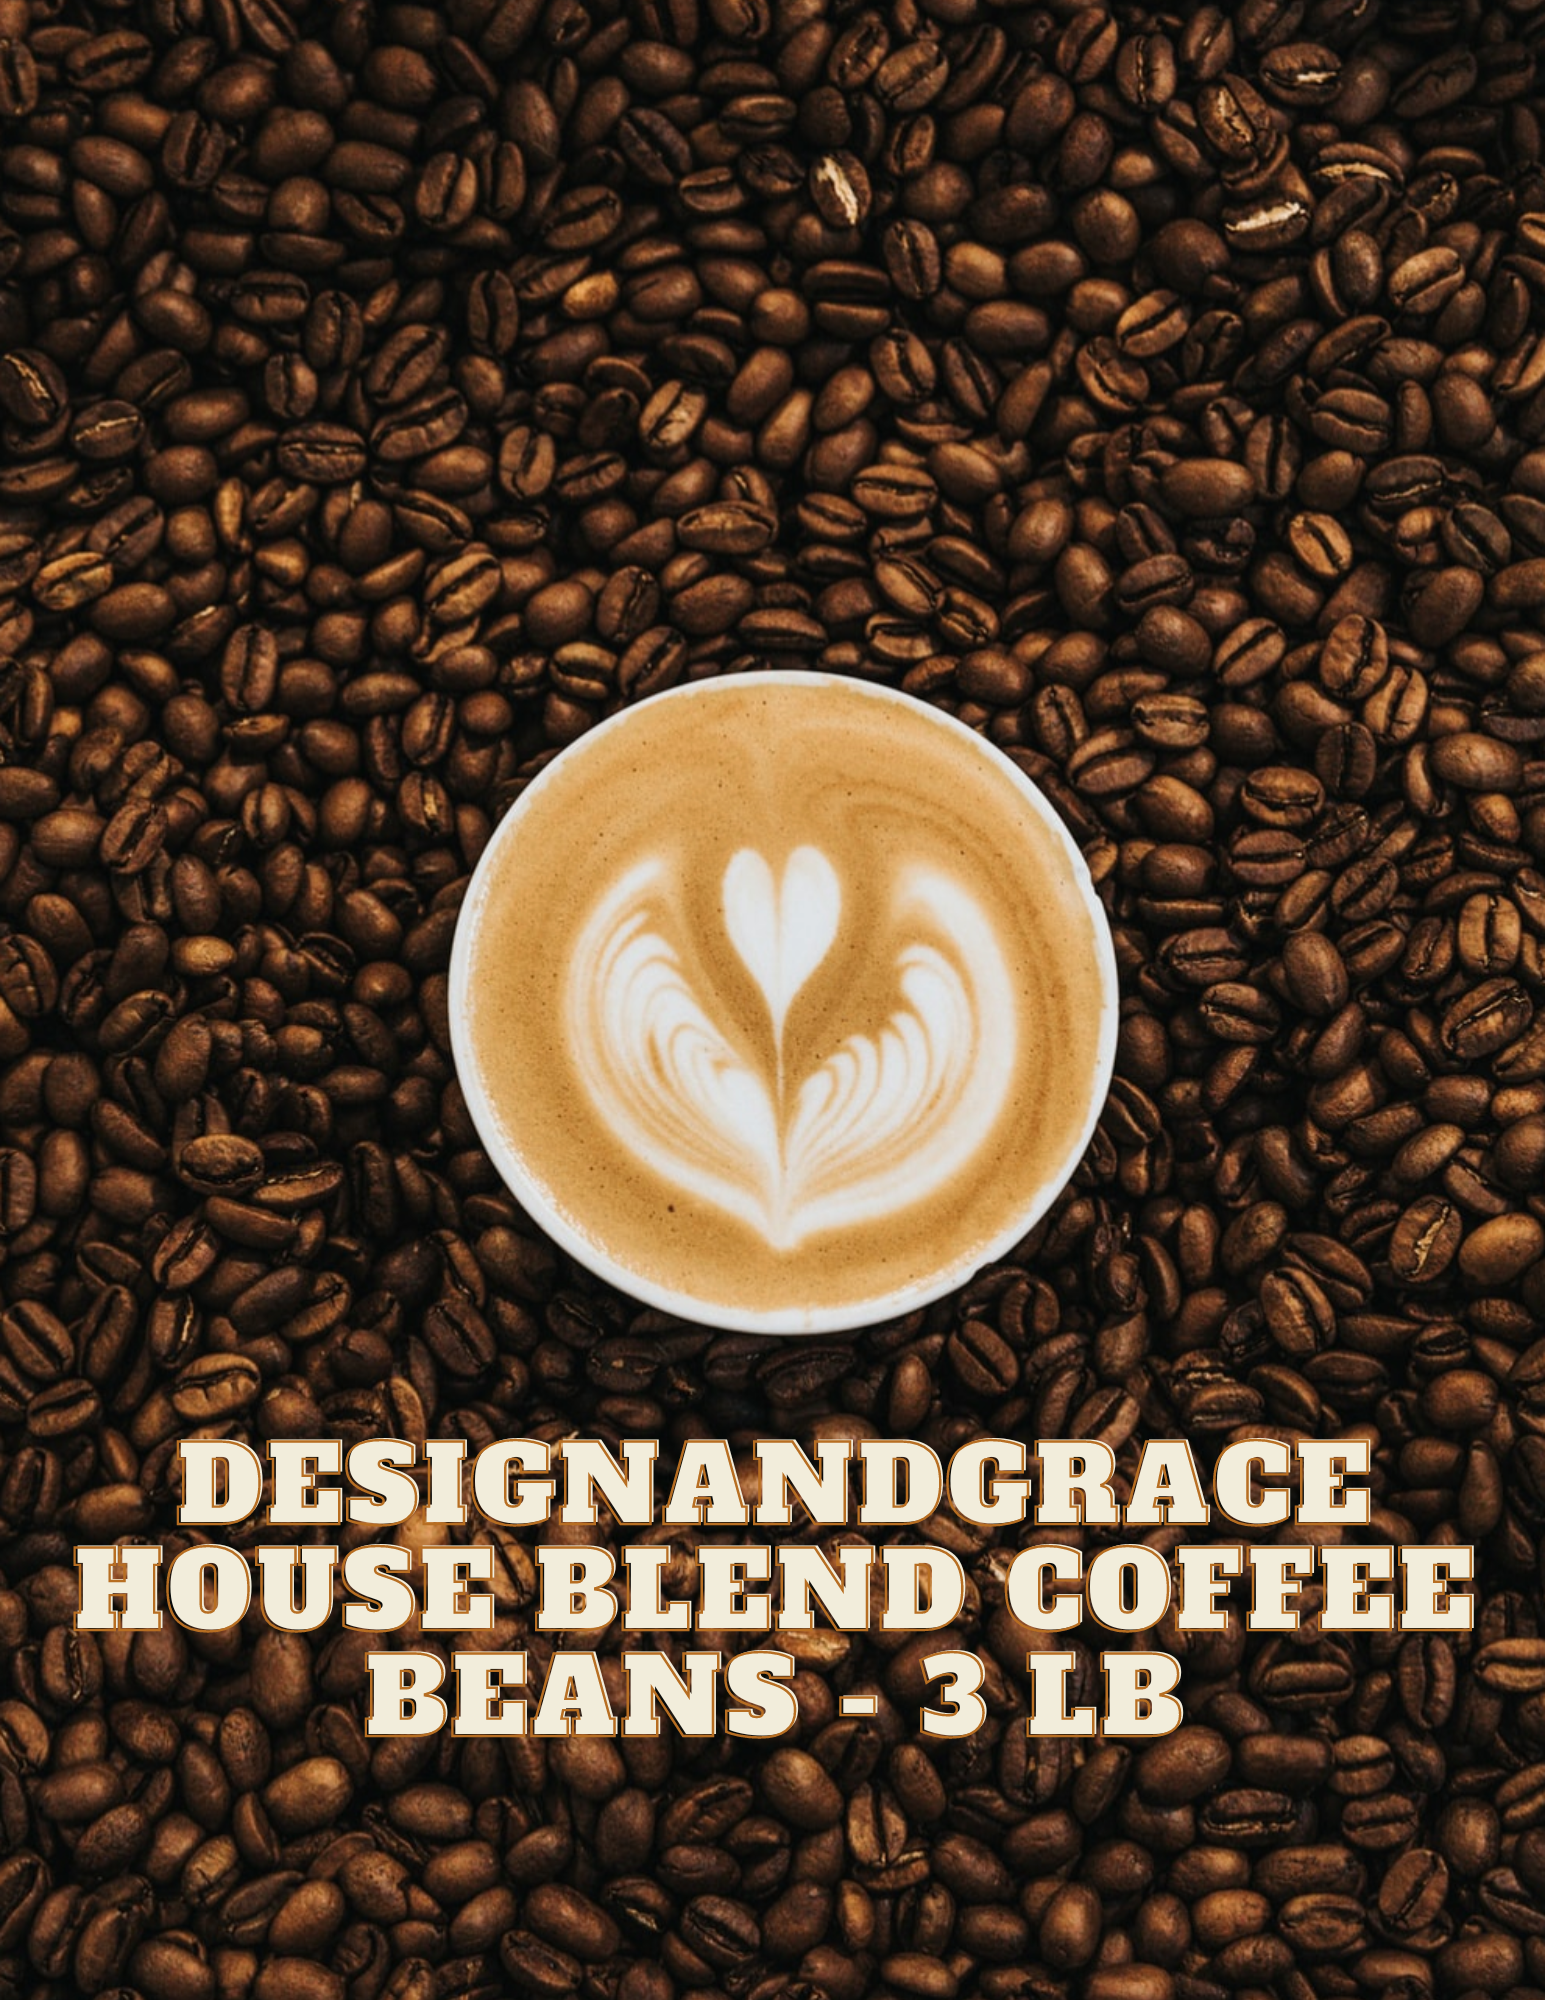 DesignandGrace House Blend Coffee Beans - 3 lb